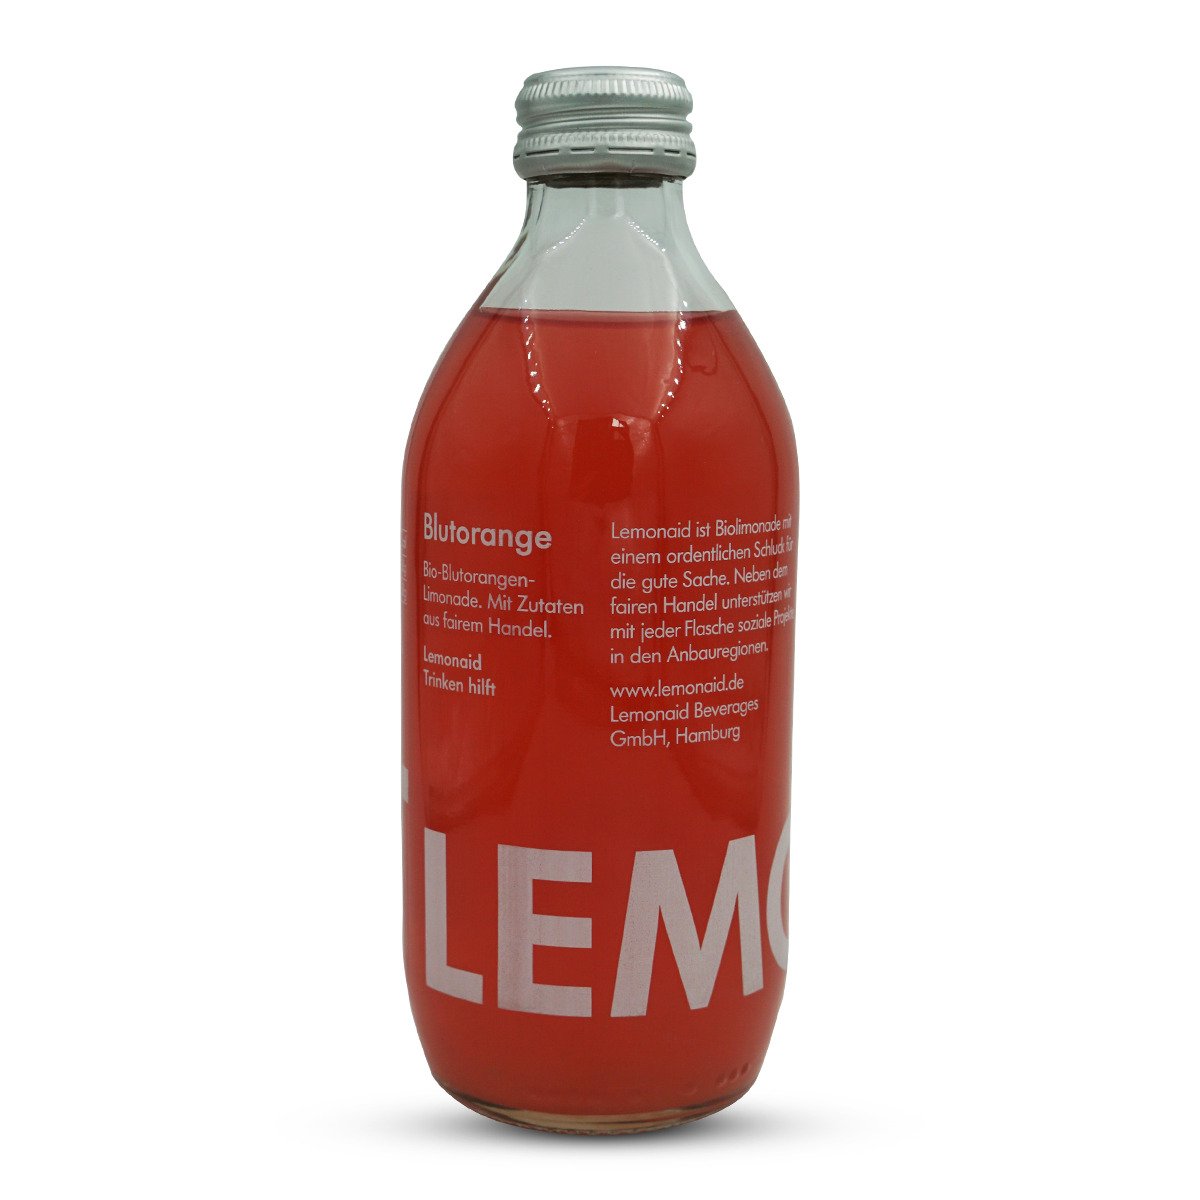 LemonAid Bio Blutorange